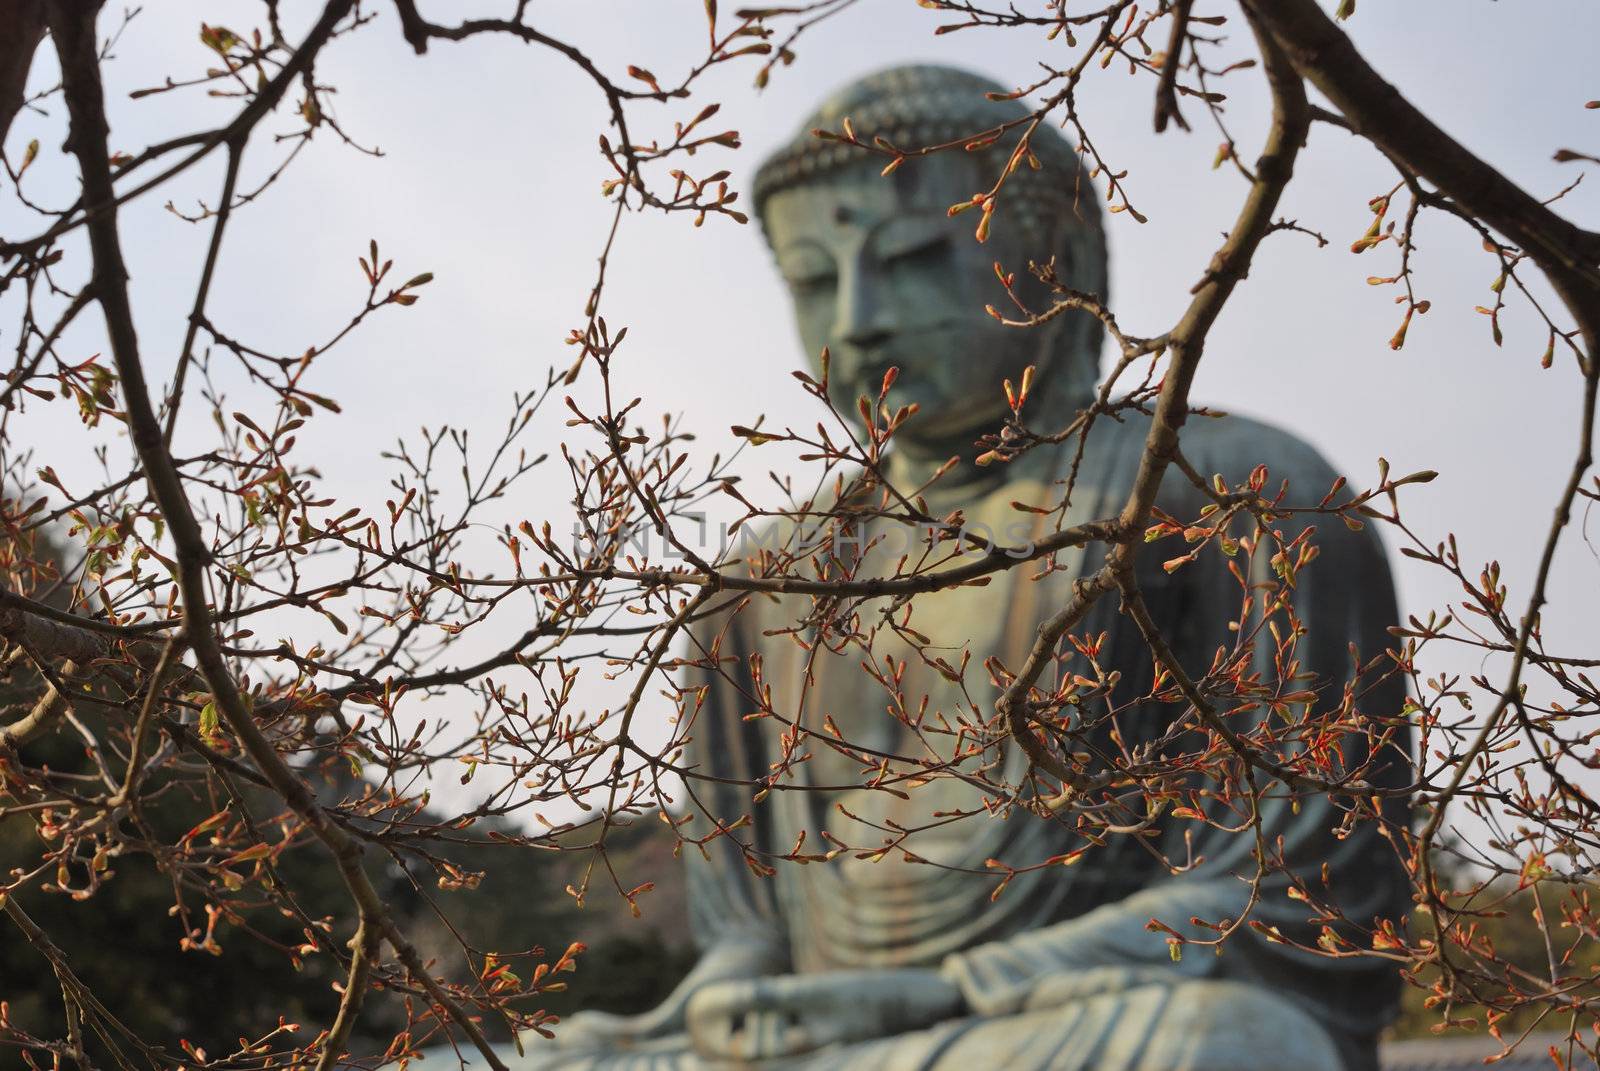 scenic spring-time image of famous Japanese landmark, Giant Buddha in Kamakura city; focus on blossom tree branches